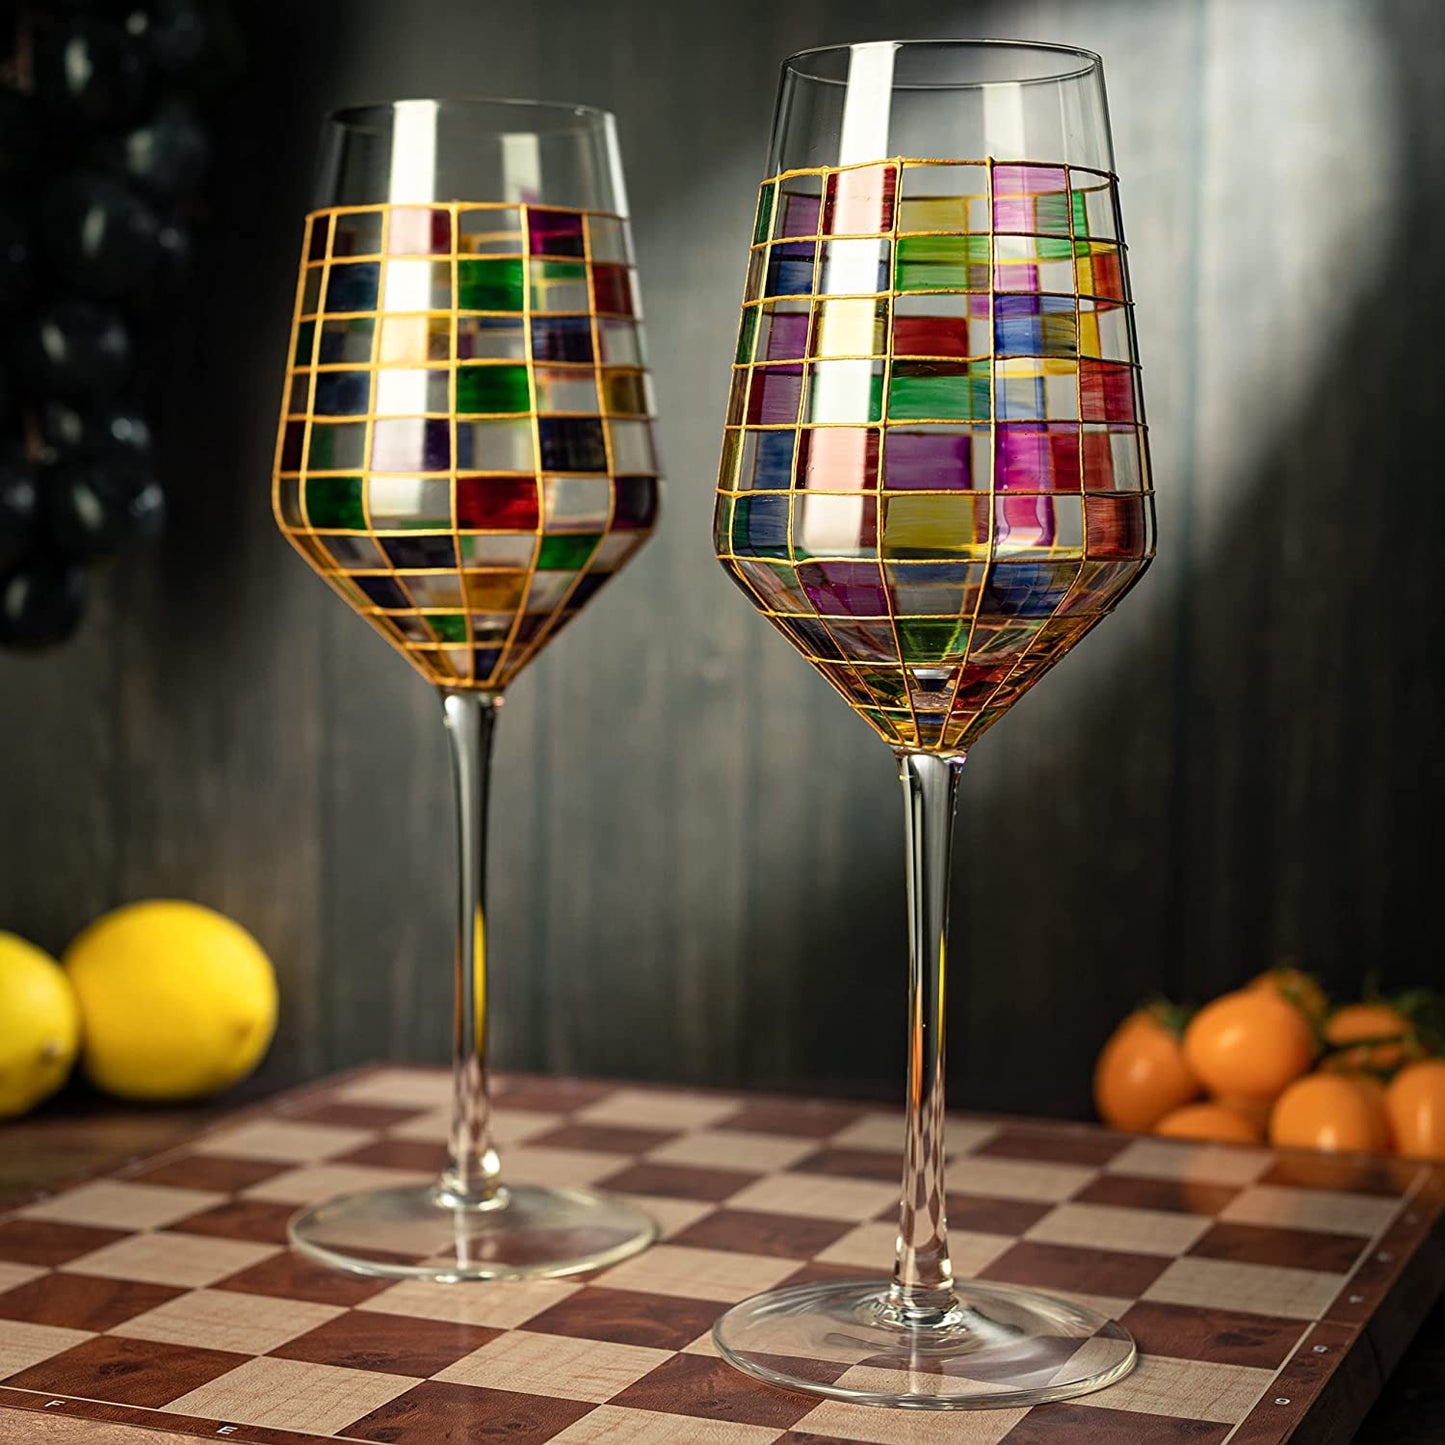 The Wine Savant - Renaissance Stained Wine Glasses - Festive Set of 2 Stemmed Glasses